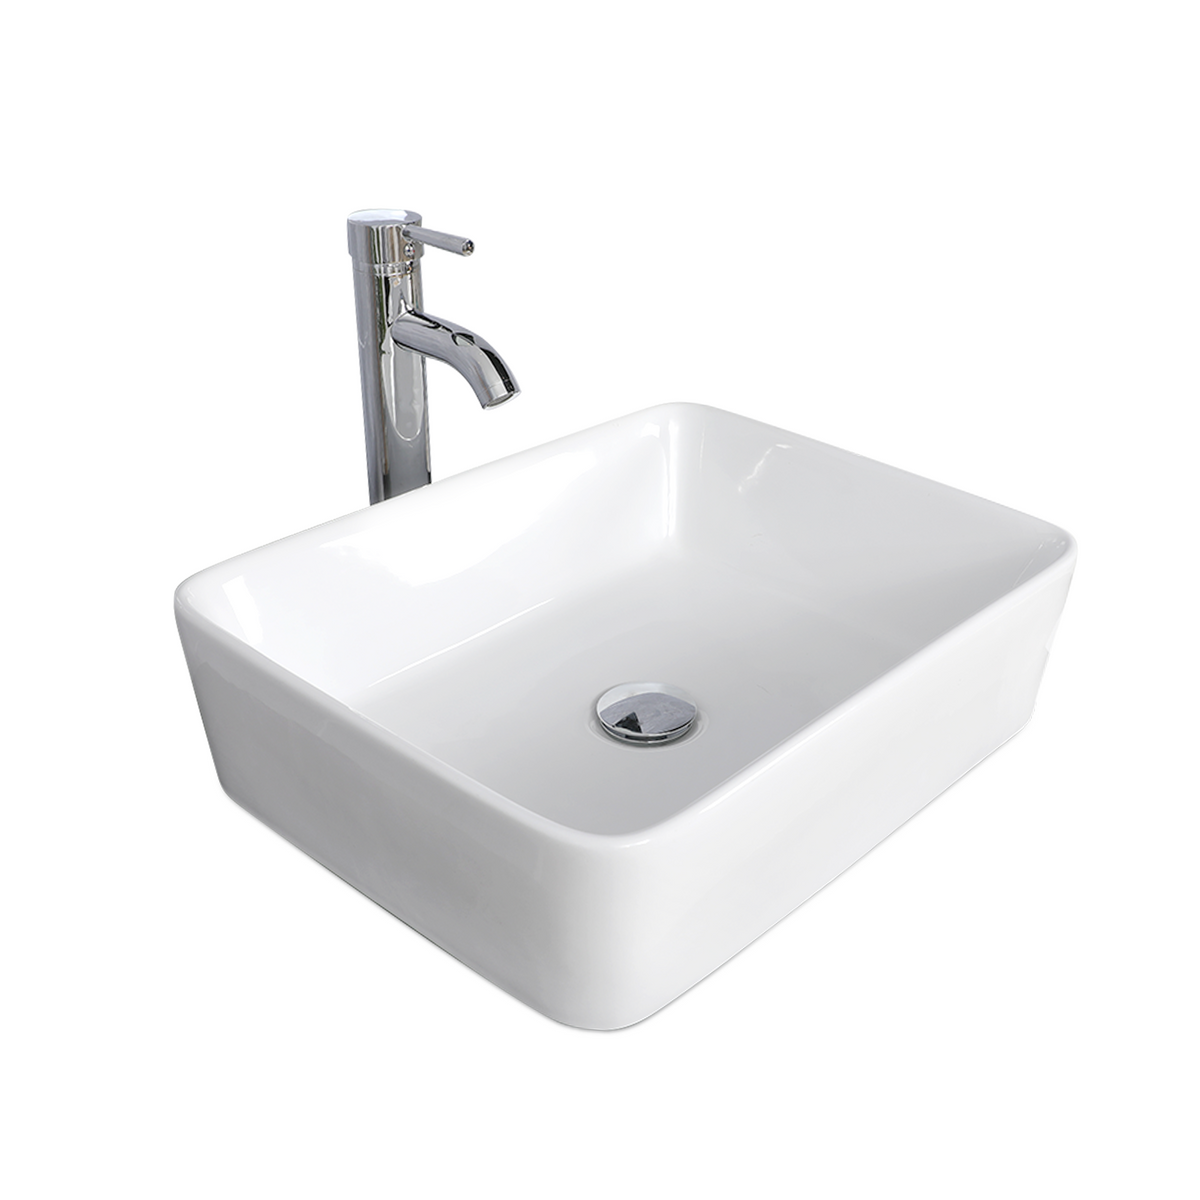 Bathroom Vessel Sink Combo Ceramic Bowl & Faucet & Pop Up Drain—White Rectangle